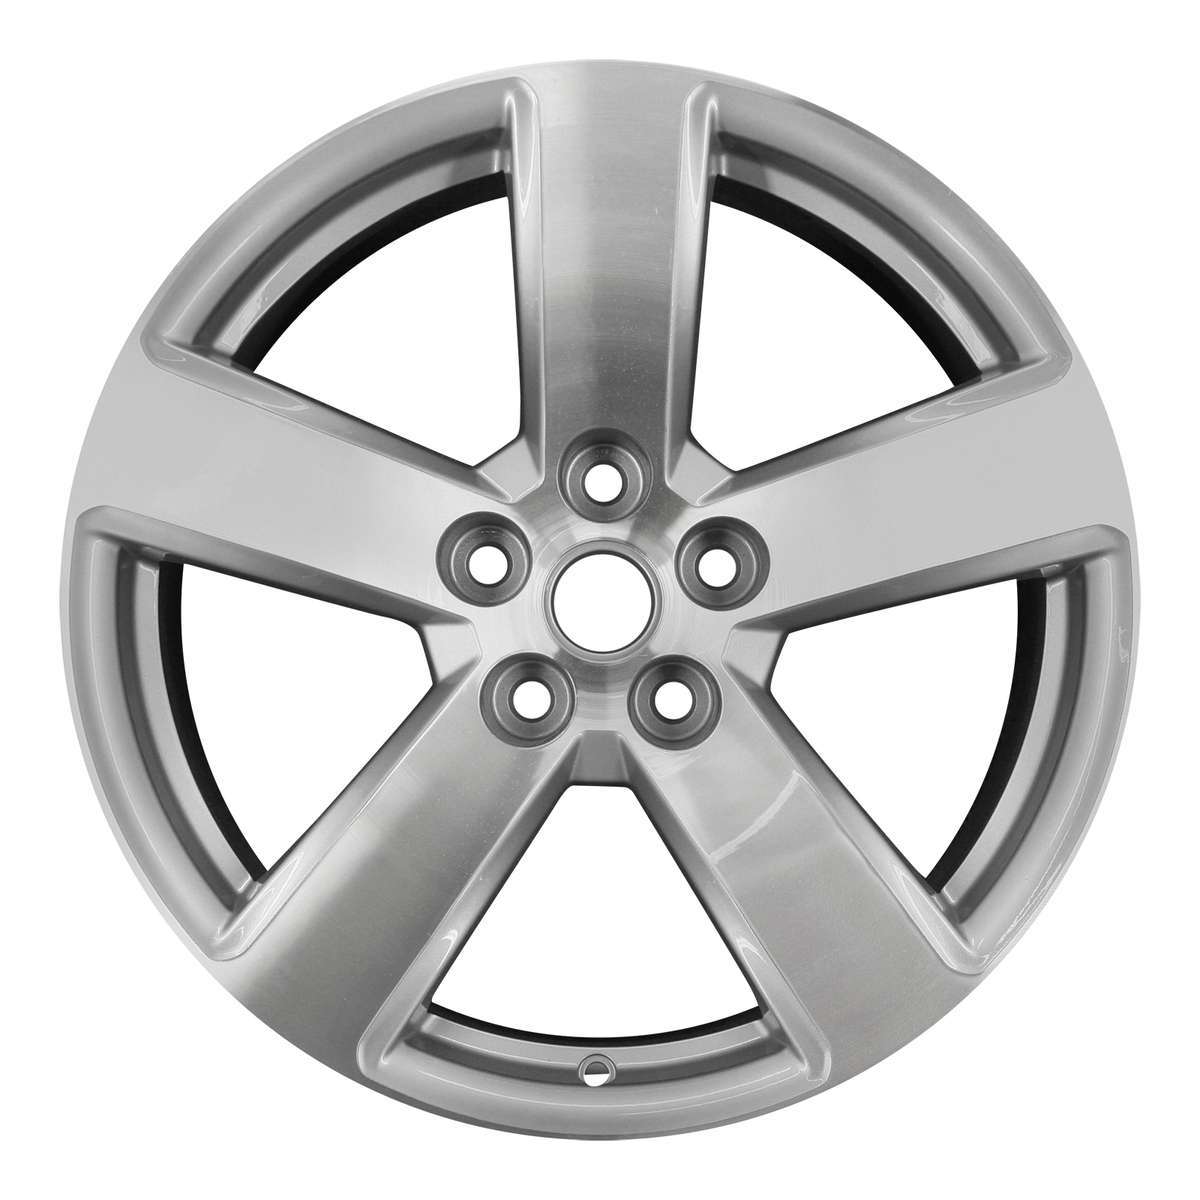 2015 Chevrolet Malibu 19" OEM Wheel Rim W5562MS